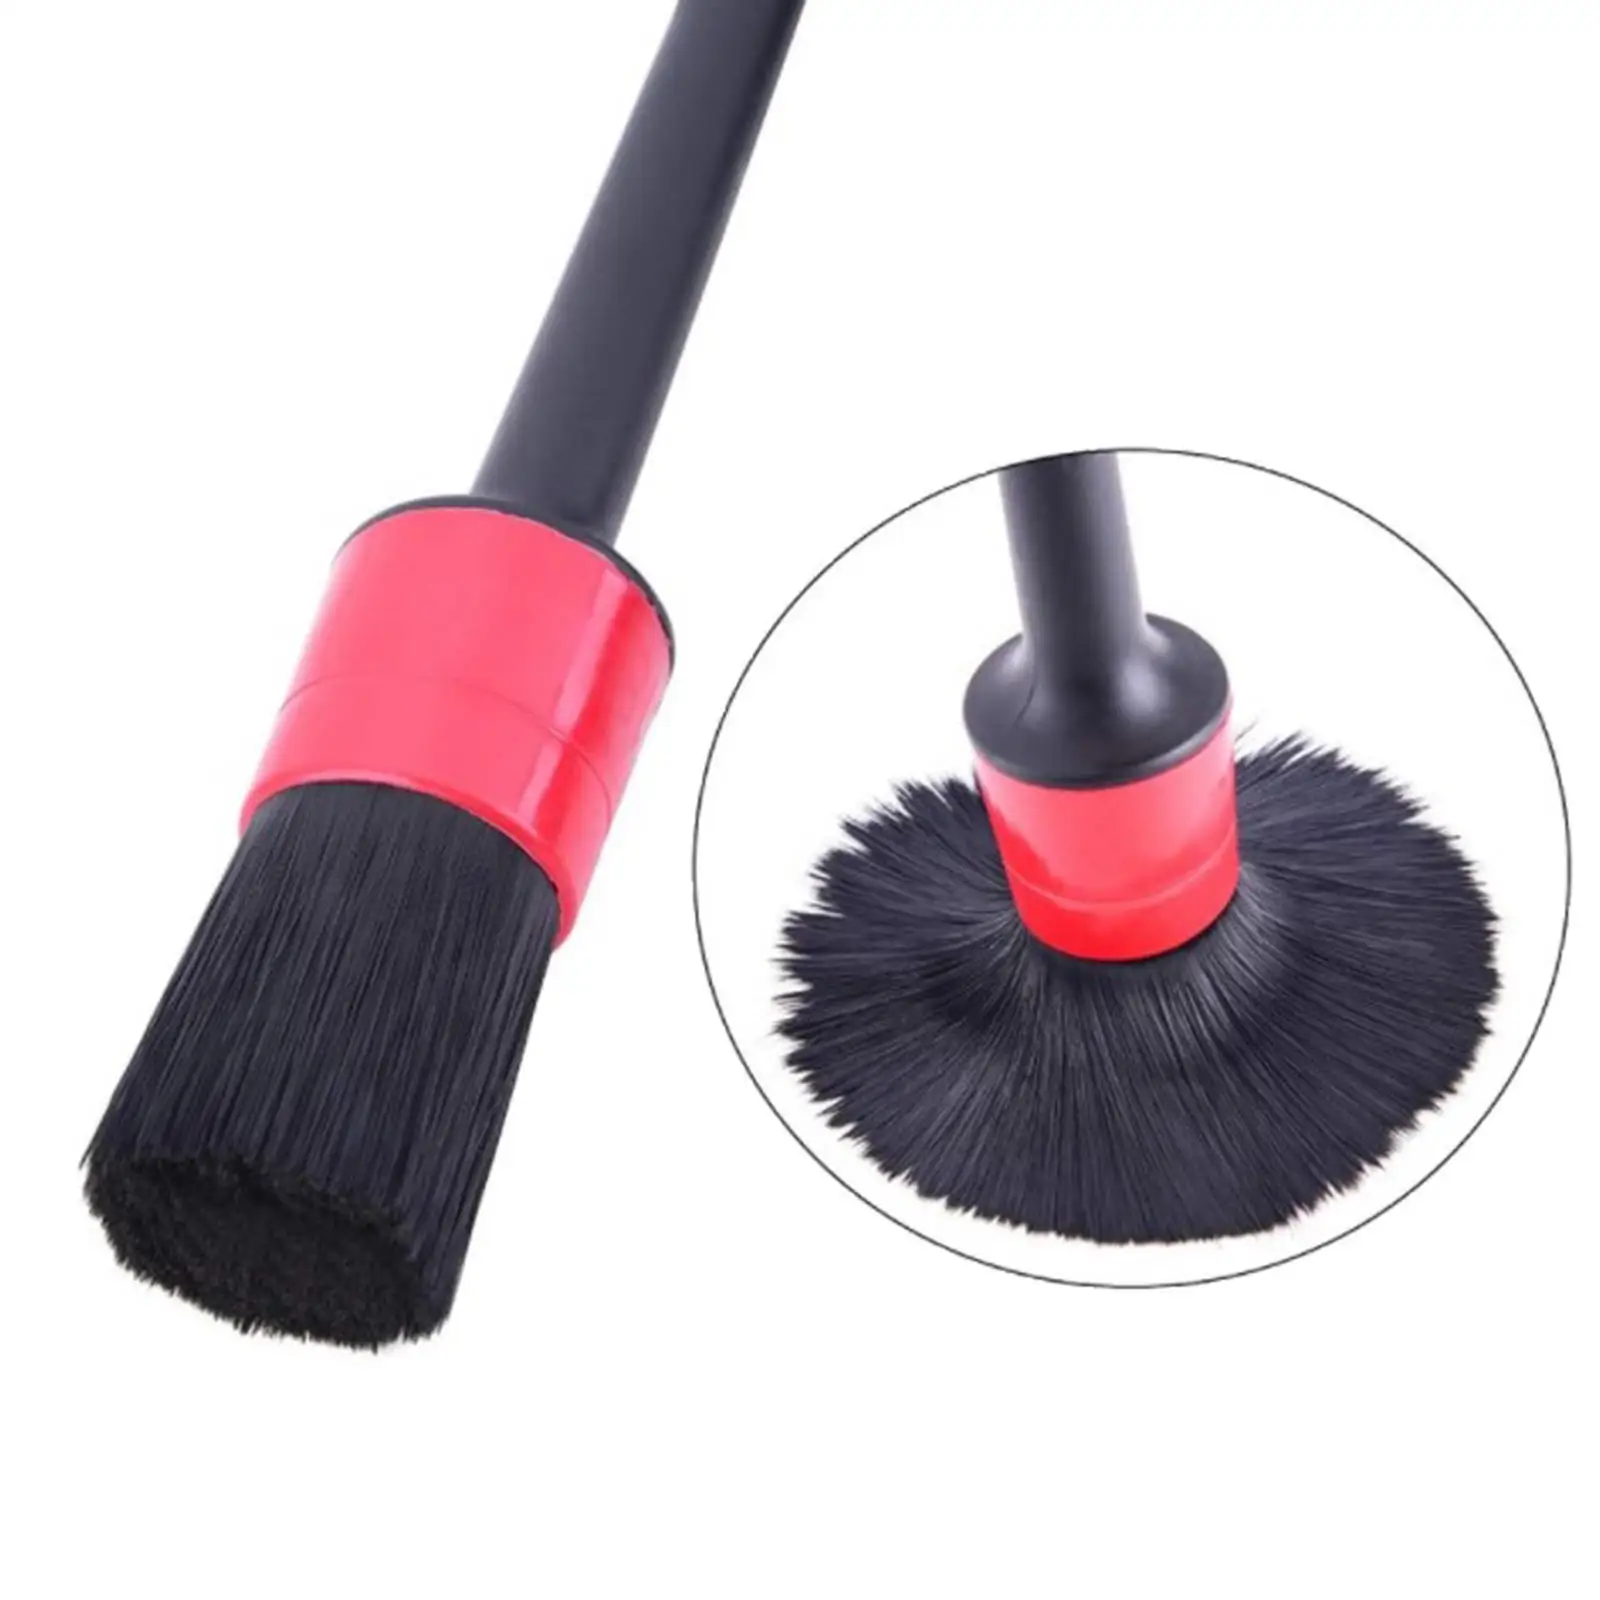 6pcs Car Detailing Brush Set Car Cleaning Brushes Car Cleaning Kit Tools Car Automotive Wheel Engine Clean Brush Car Care